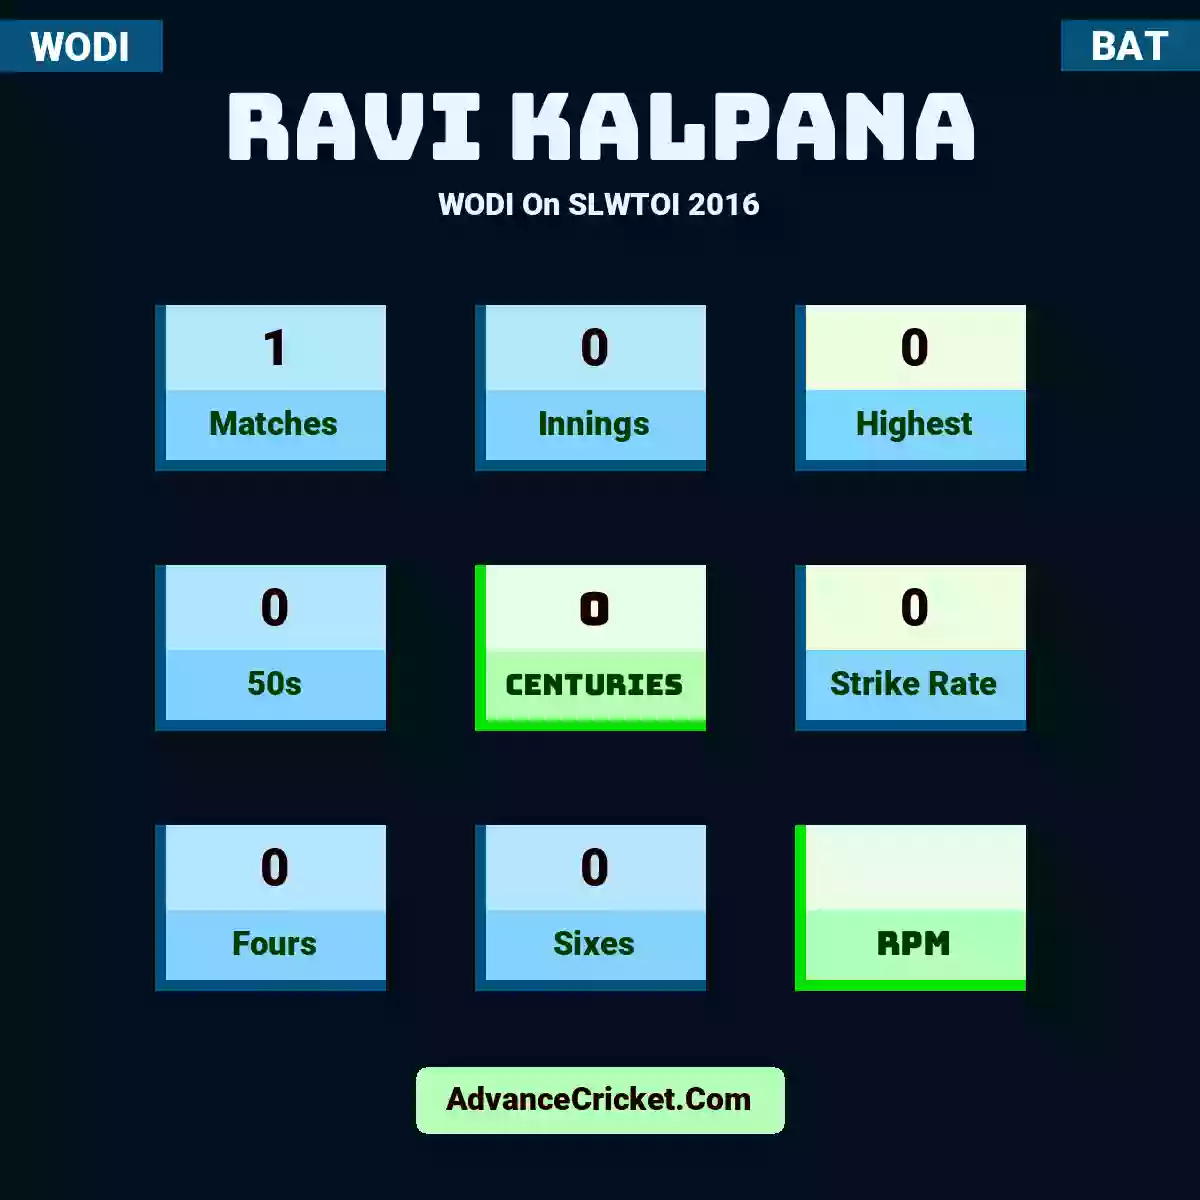 Ravi Kalpana WODI  On SLWTOI 2016, Ravi Kalpana played 1 matches, scored 0 runs as highest, 0 half-centuries, and 0 centuries, with a strike rate of 0. R.Kalpana hit 0 fours and 0 sixes.